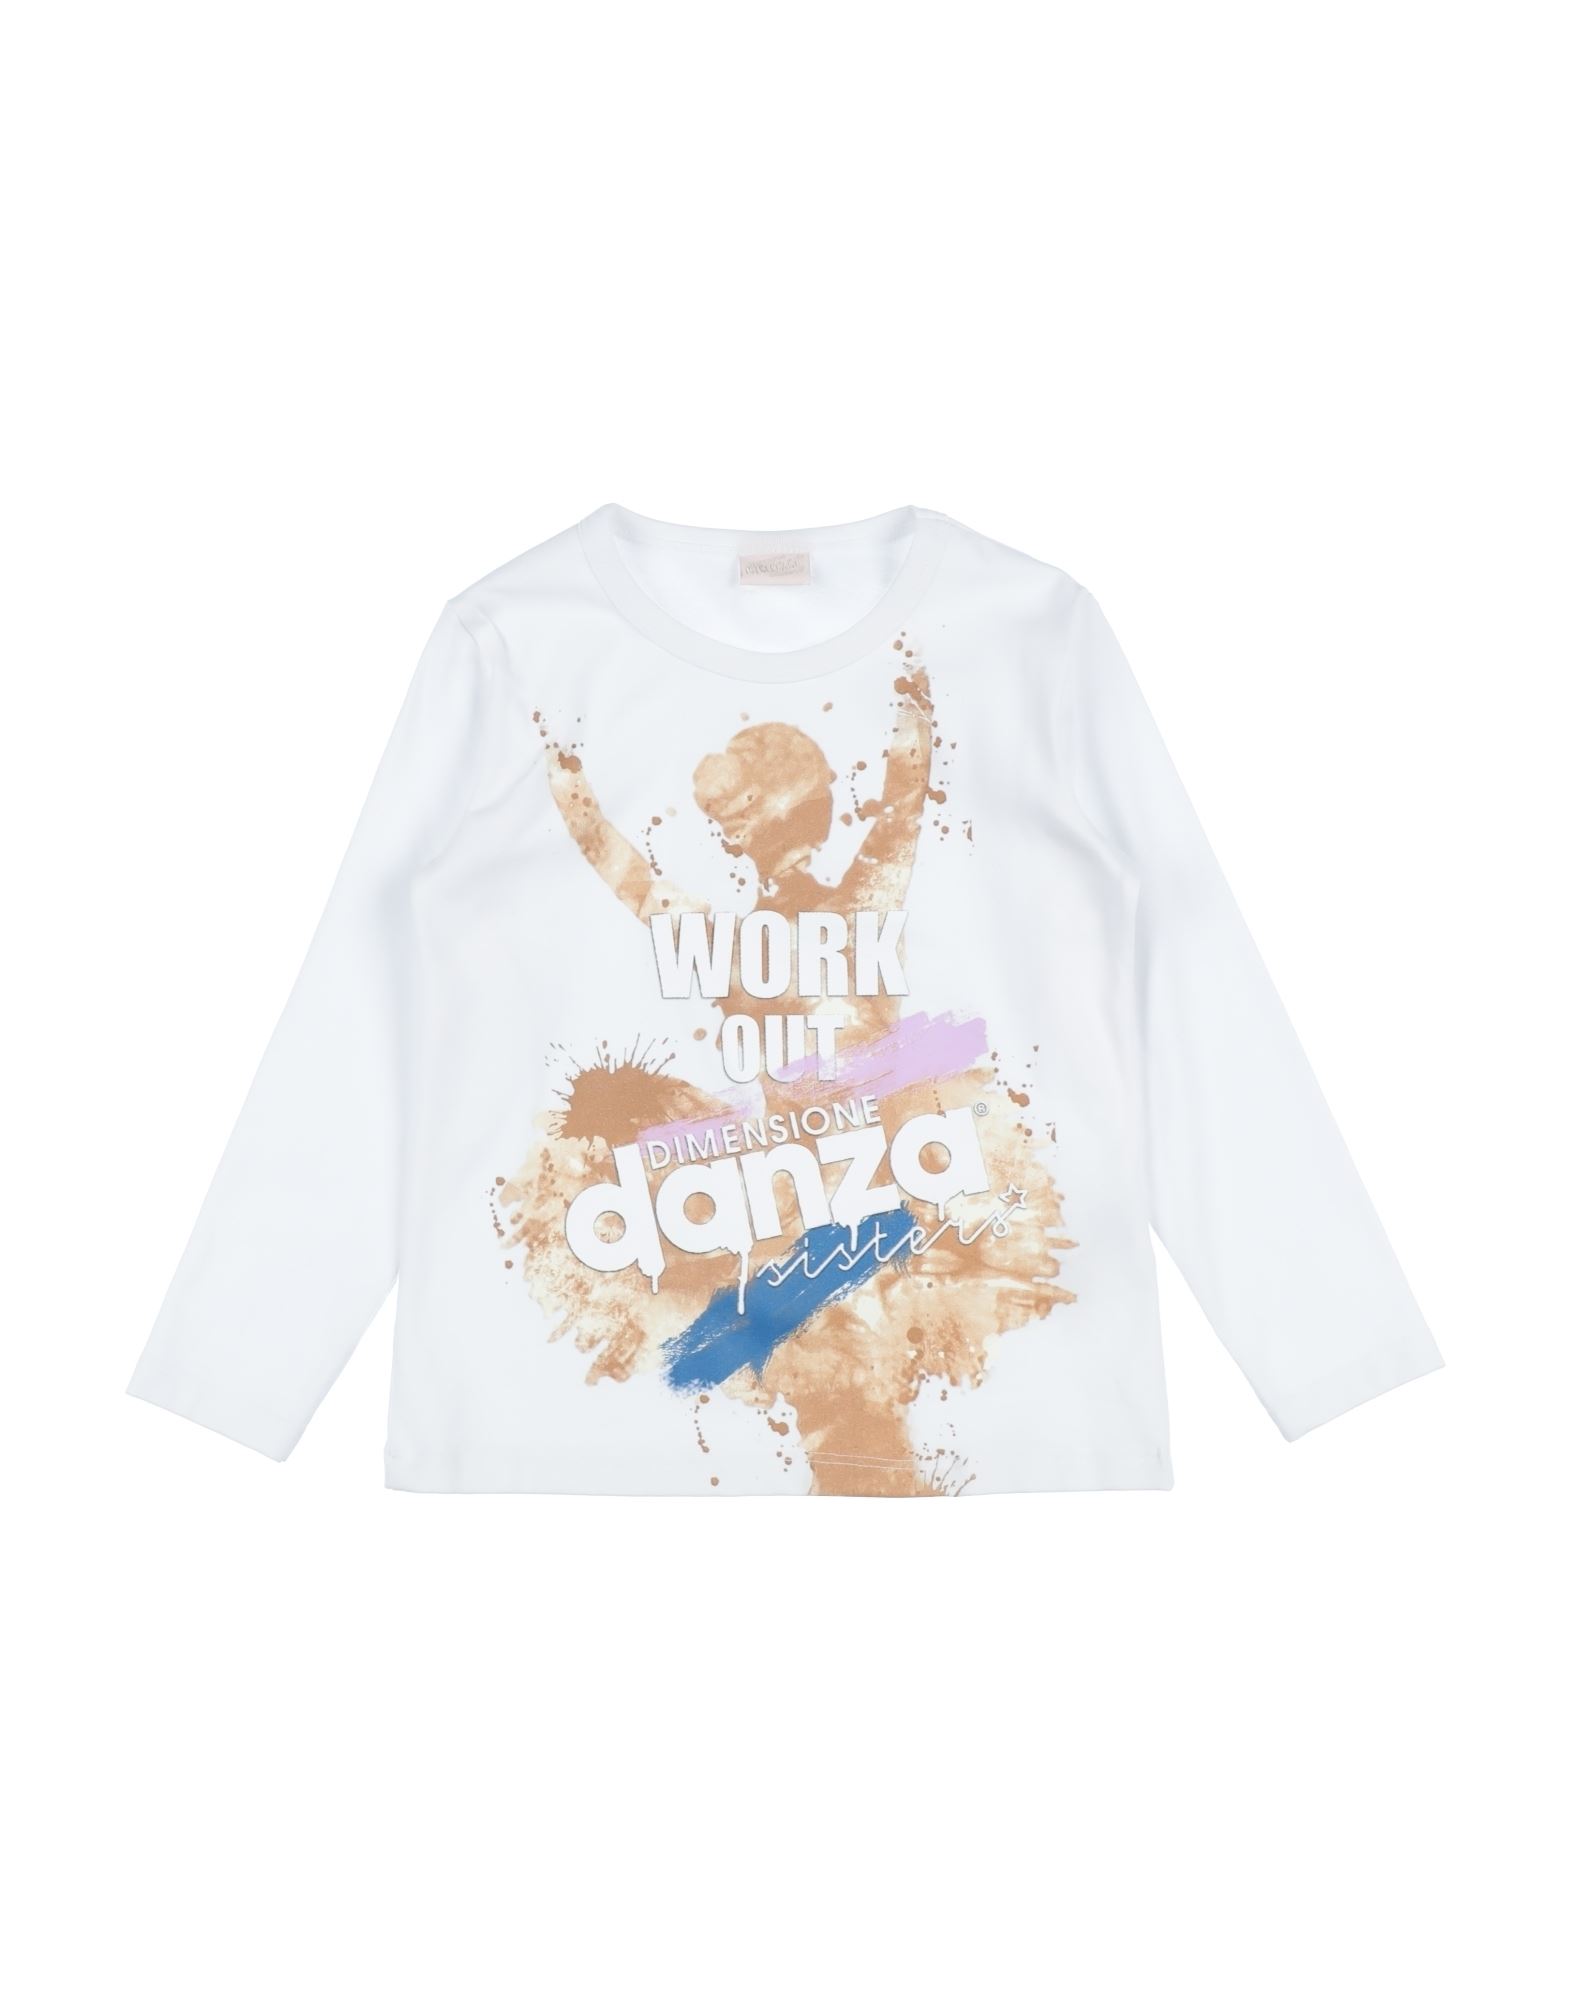 Dimensione Danza Kids' T-shirts In White